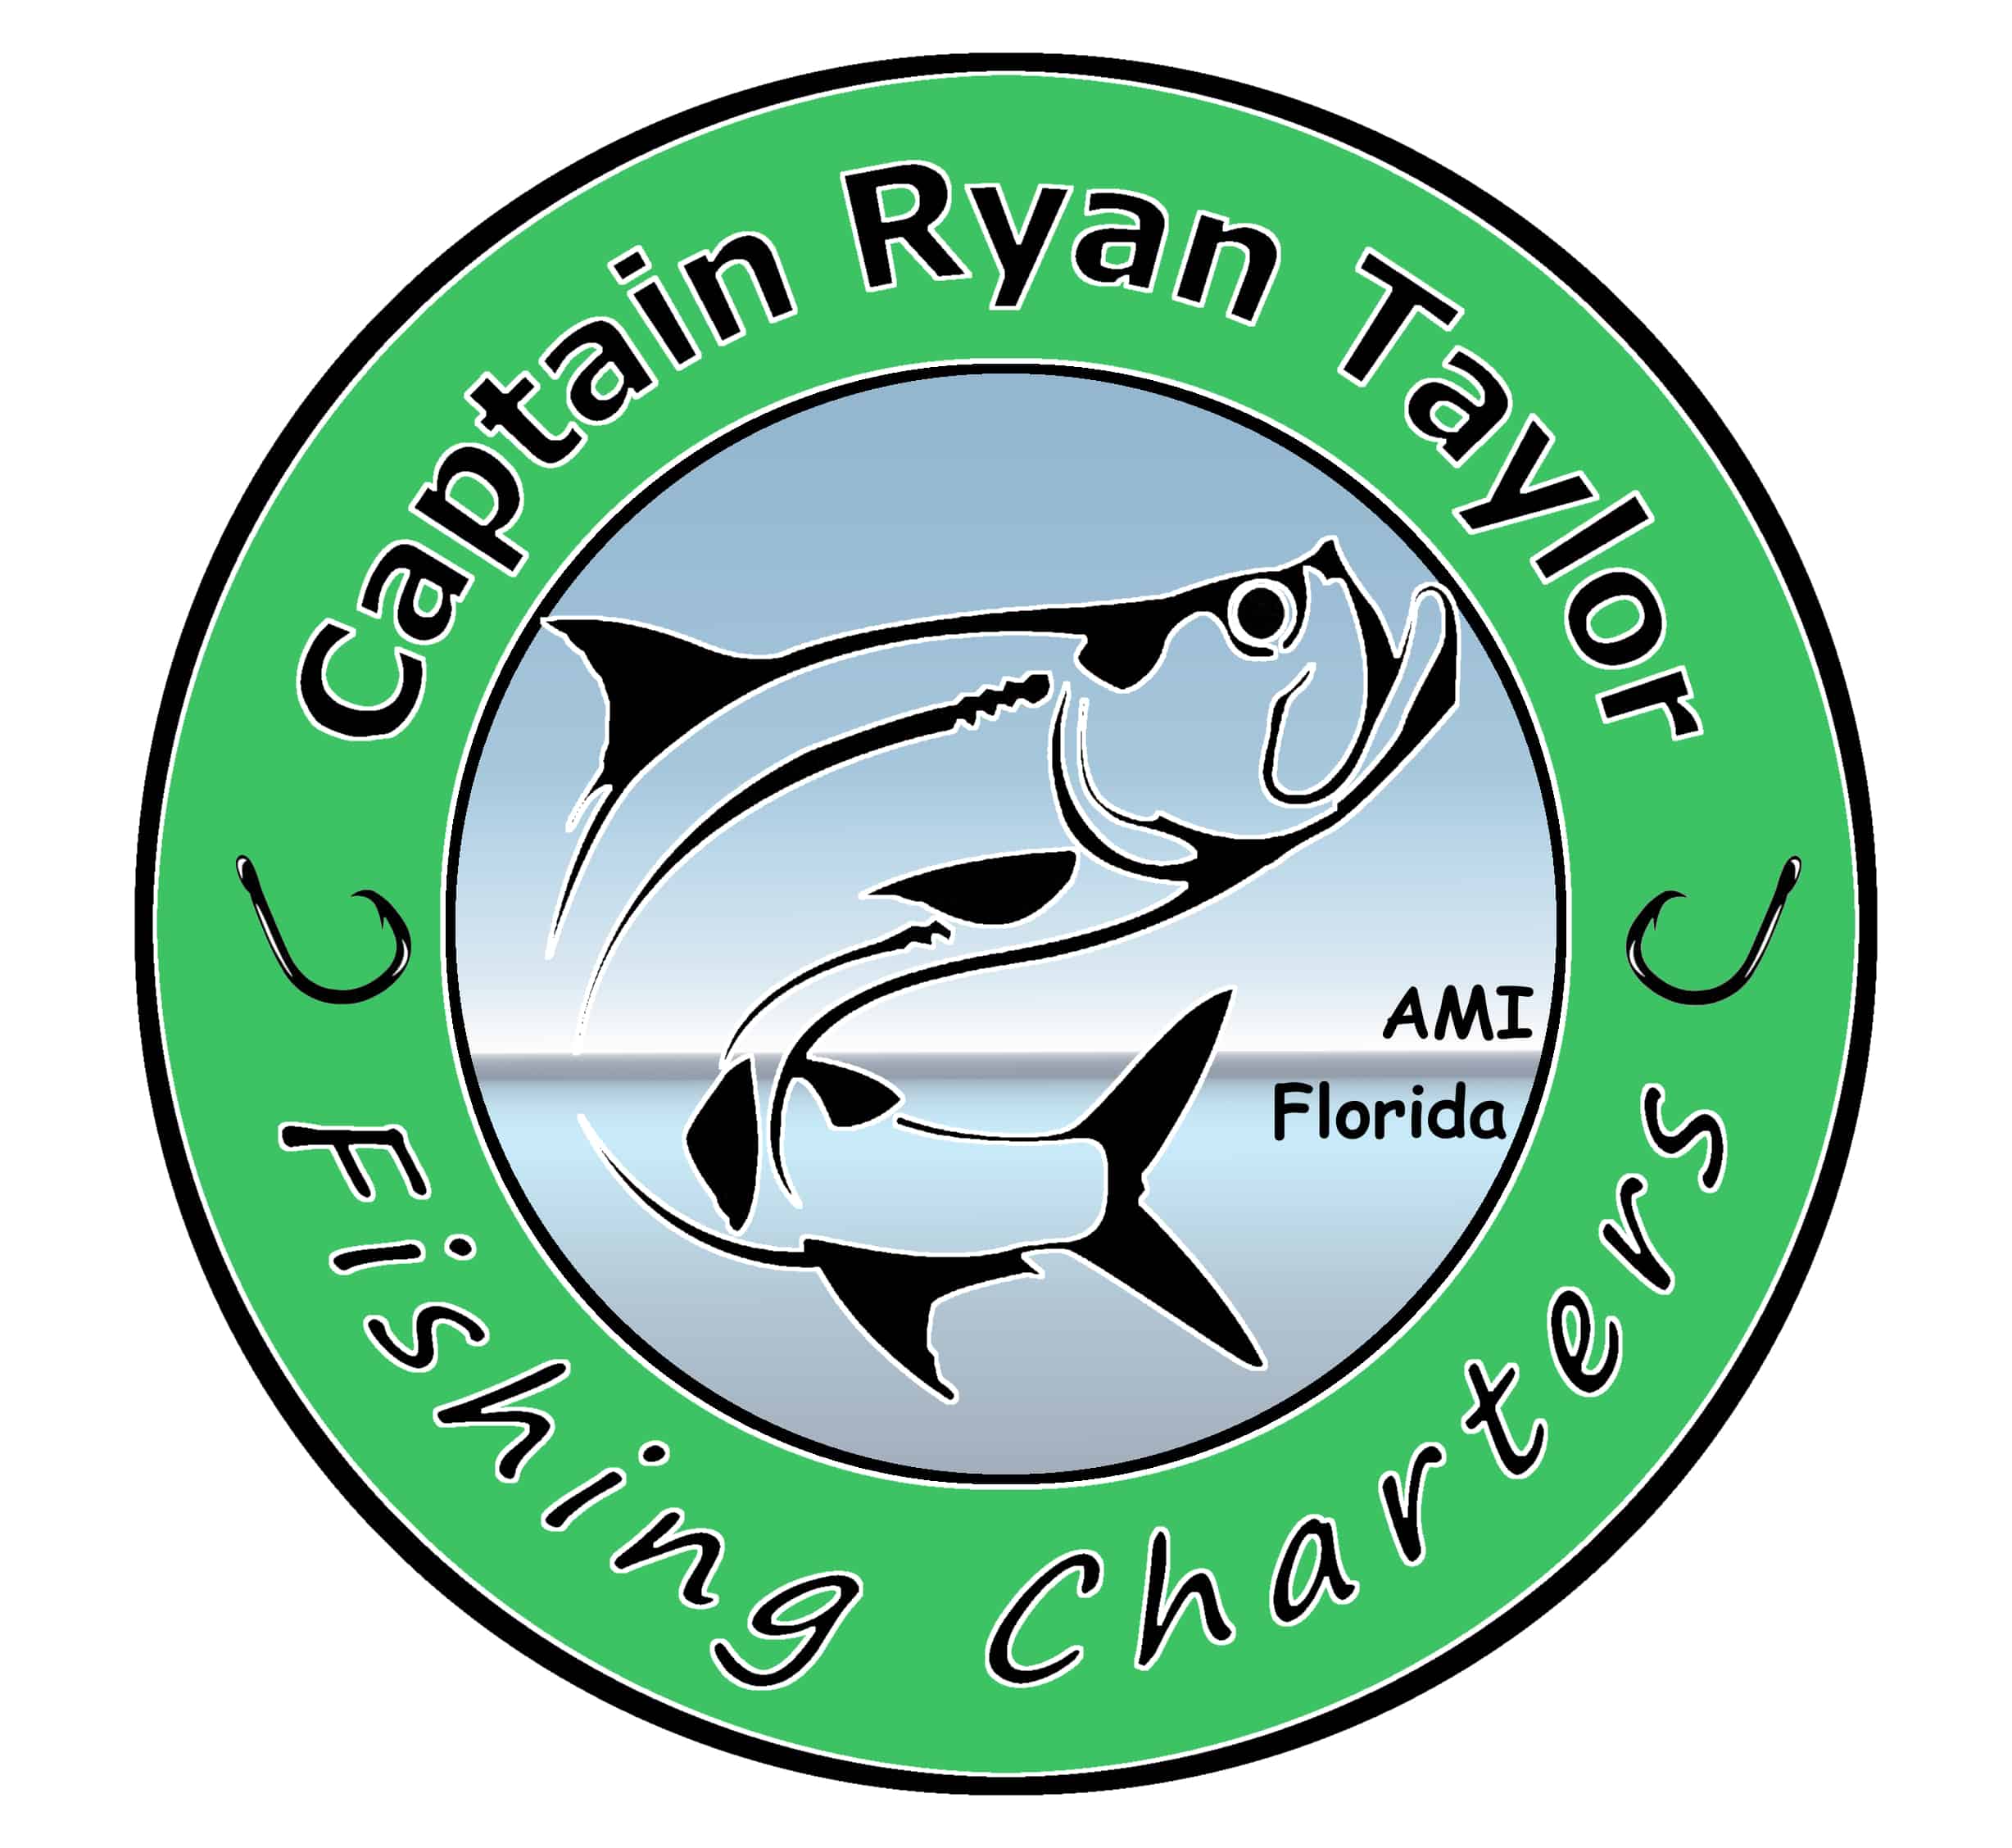 Captain Ryan Taylor Fishing Charters